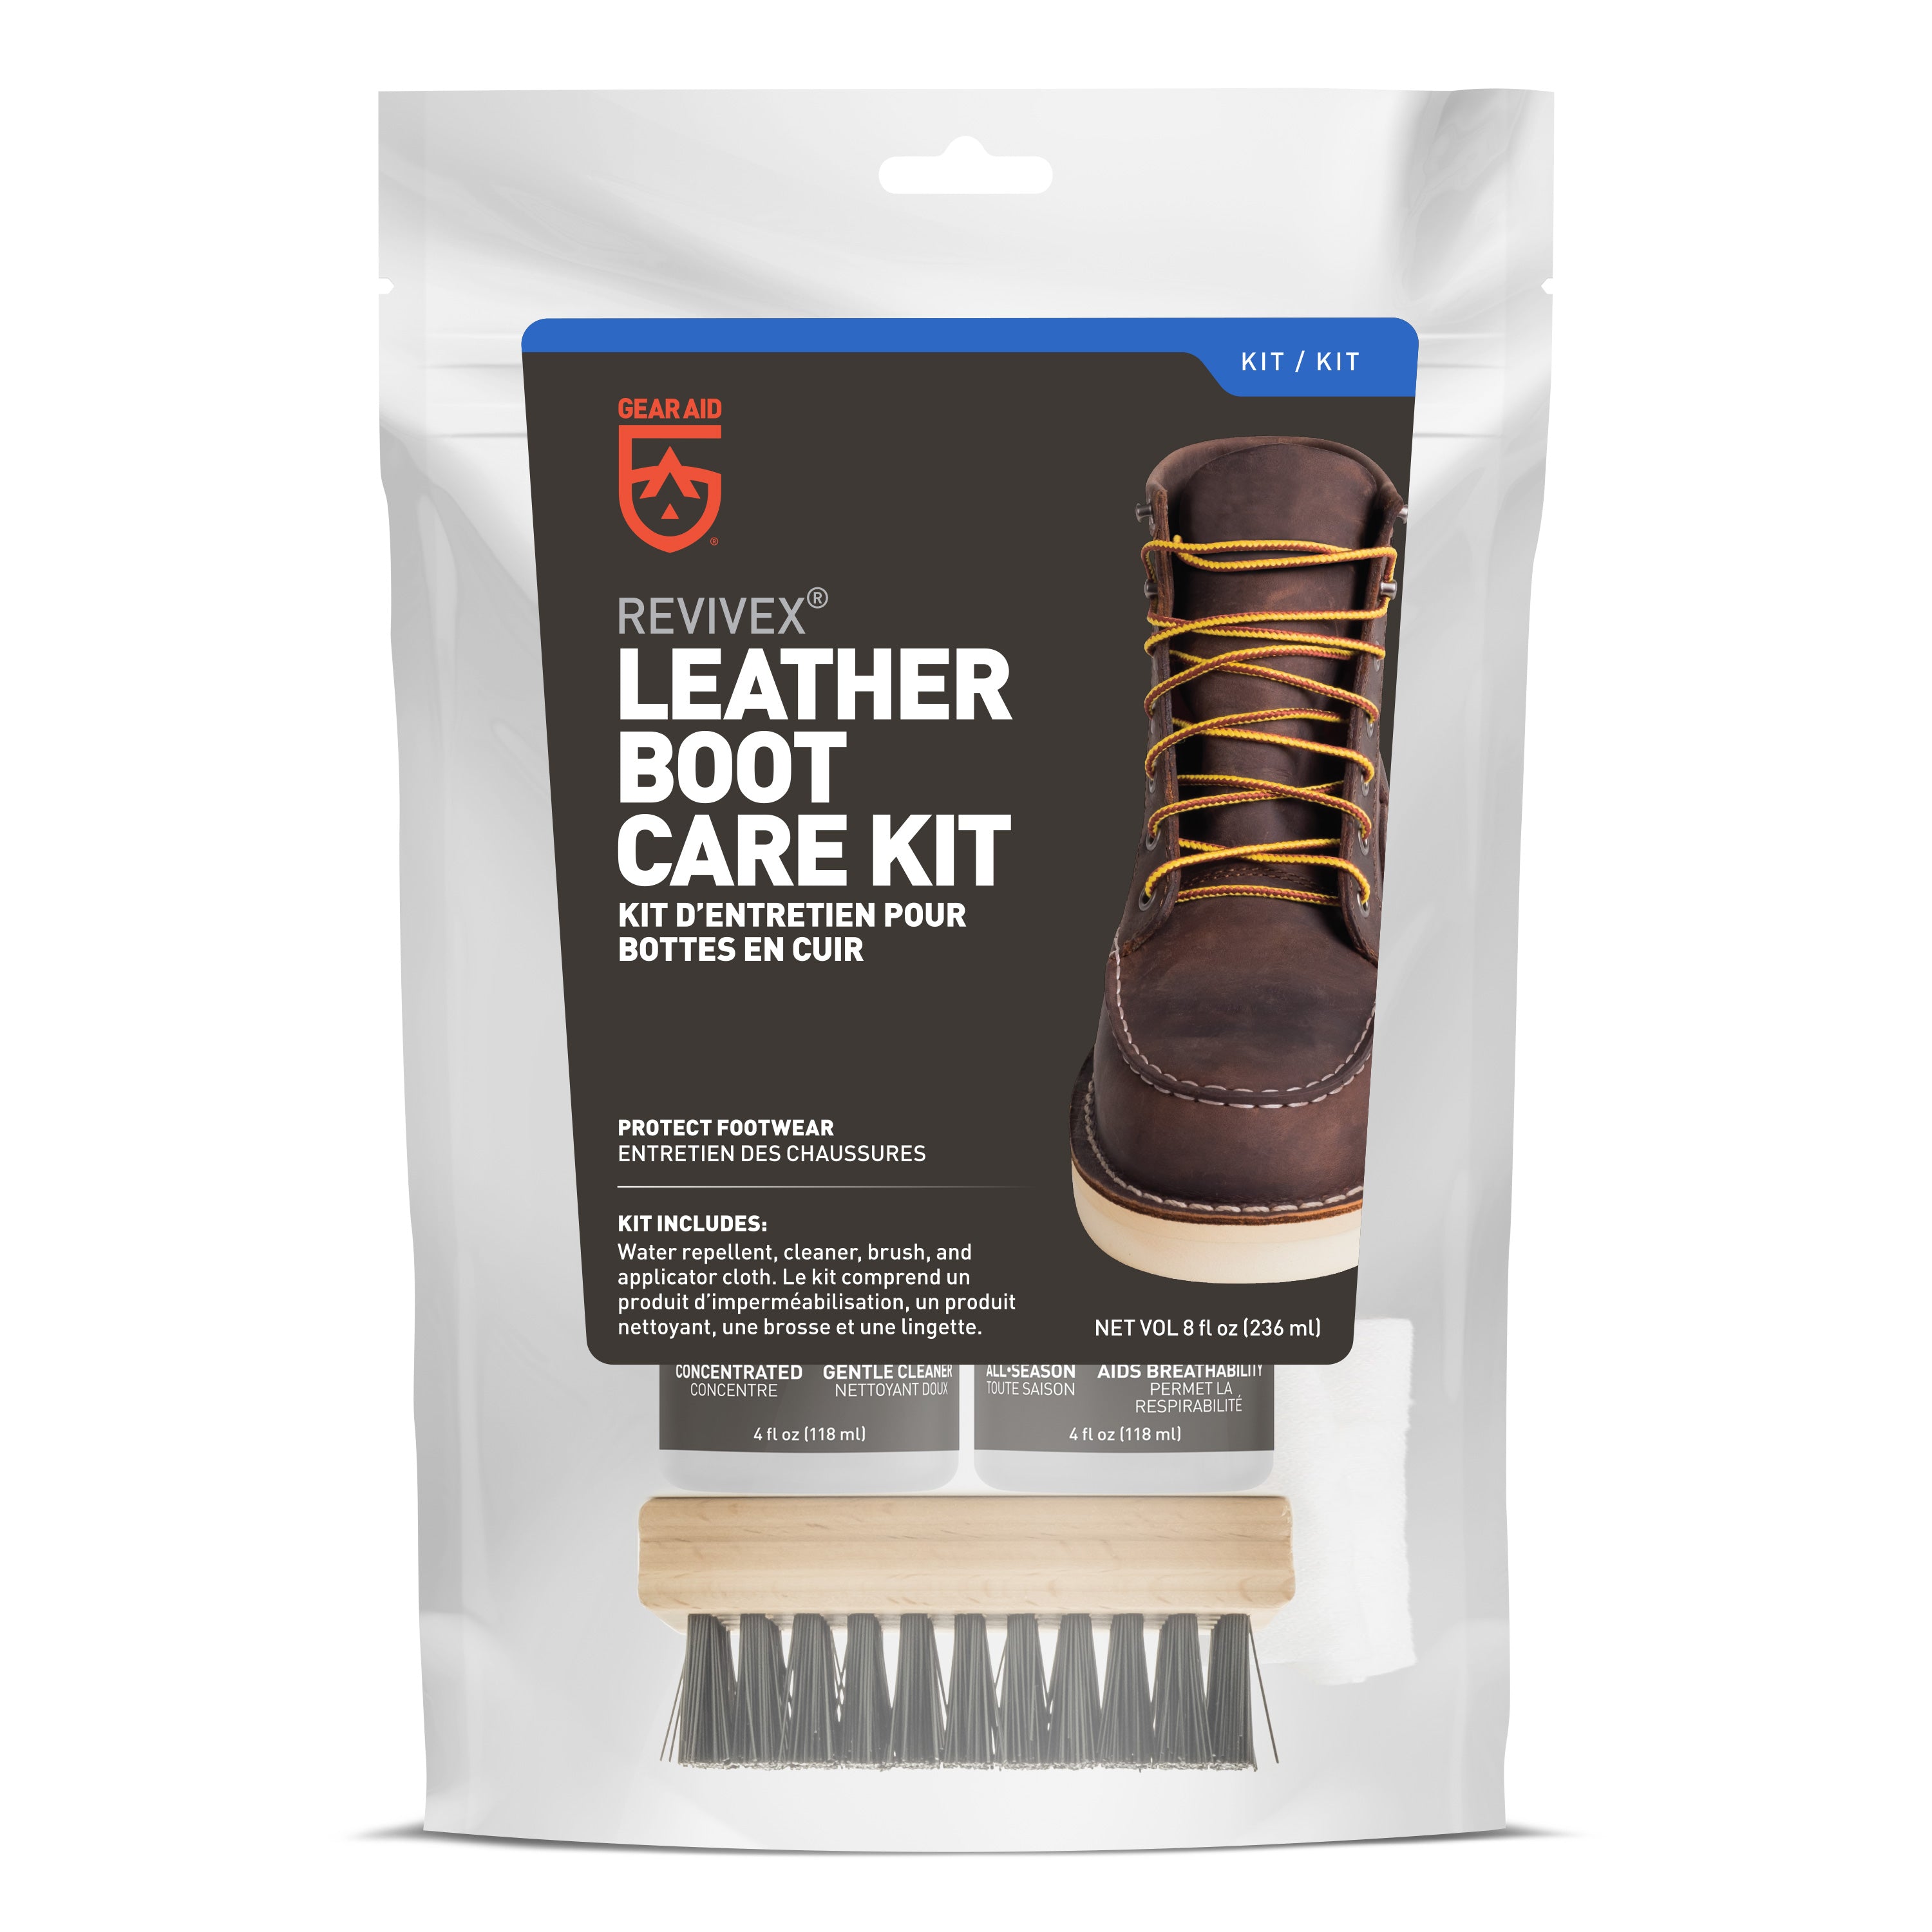 Verkeerd Afscheiden Master diploma Revivex Leather Boot Care Kit | GEAR AID